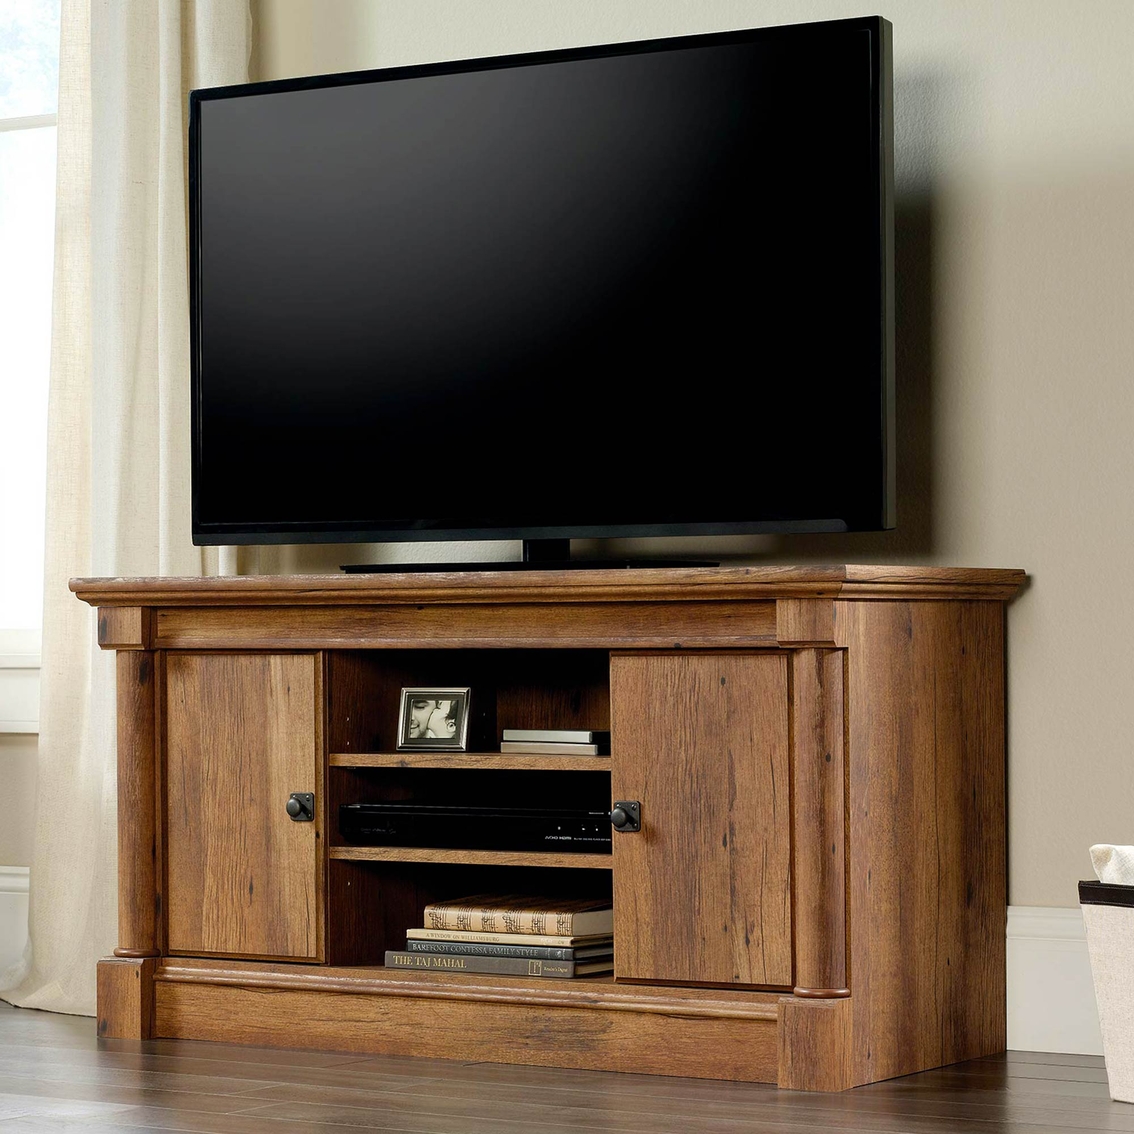 Sauder Palladia Tv Stand Media Furniture Home Appliances